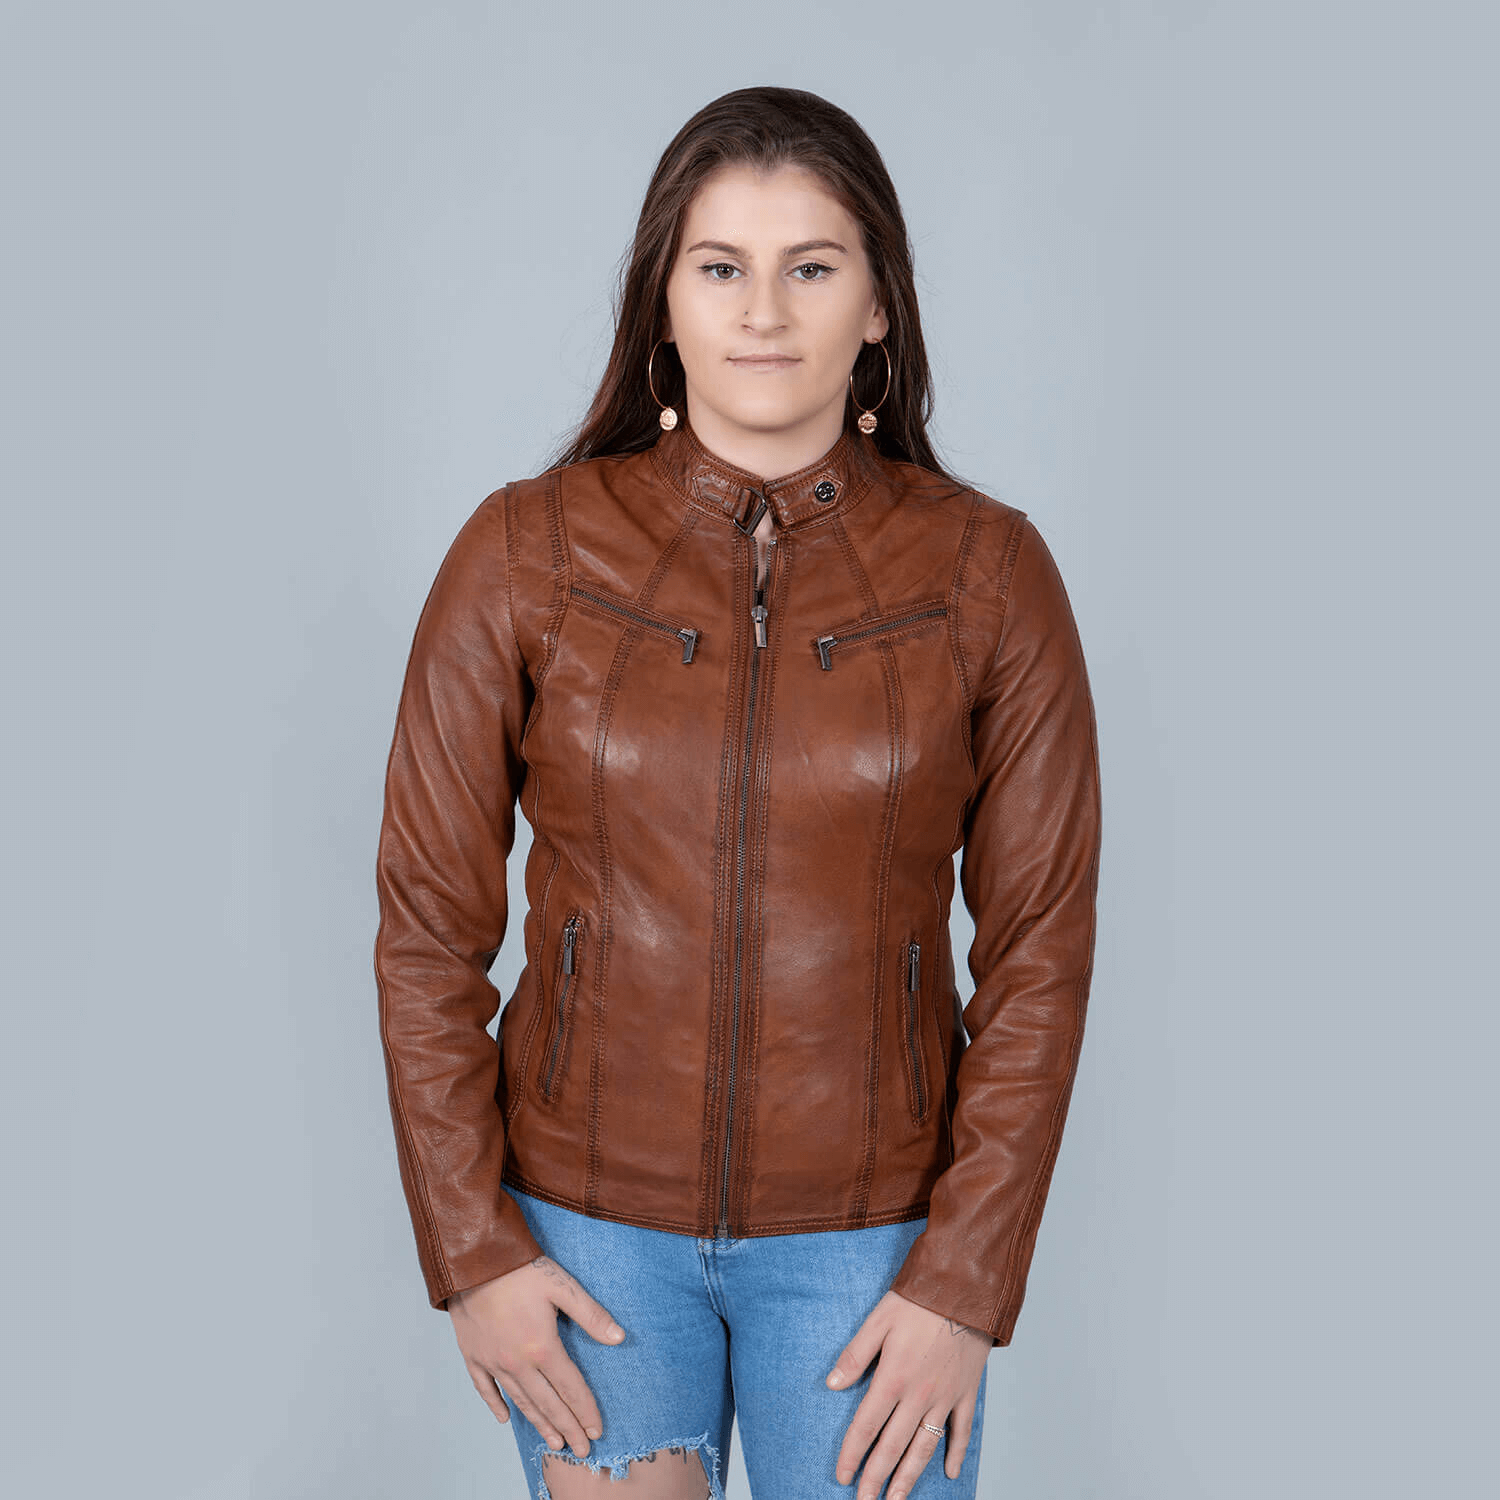 Womens leather jacket brandy 9902